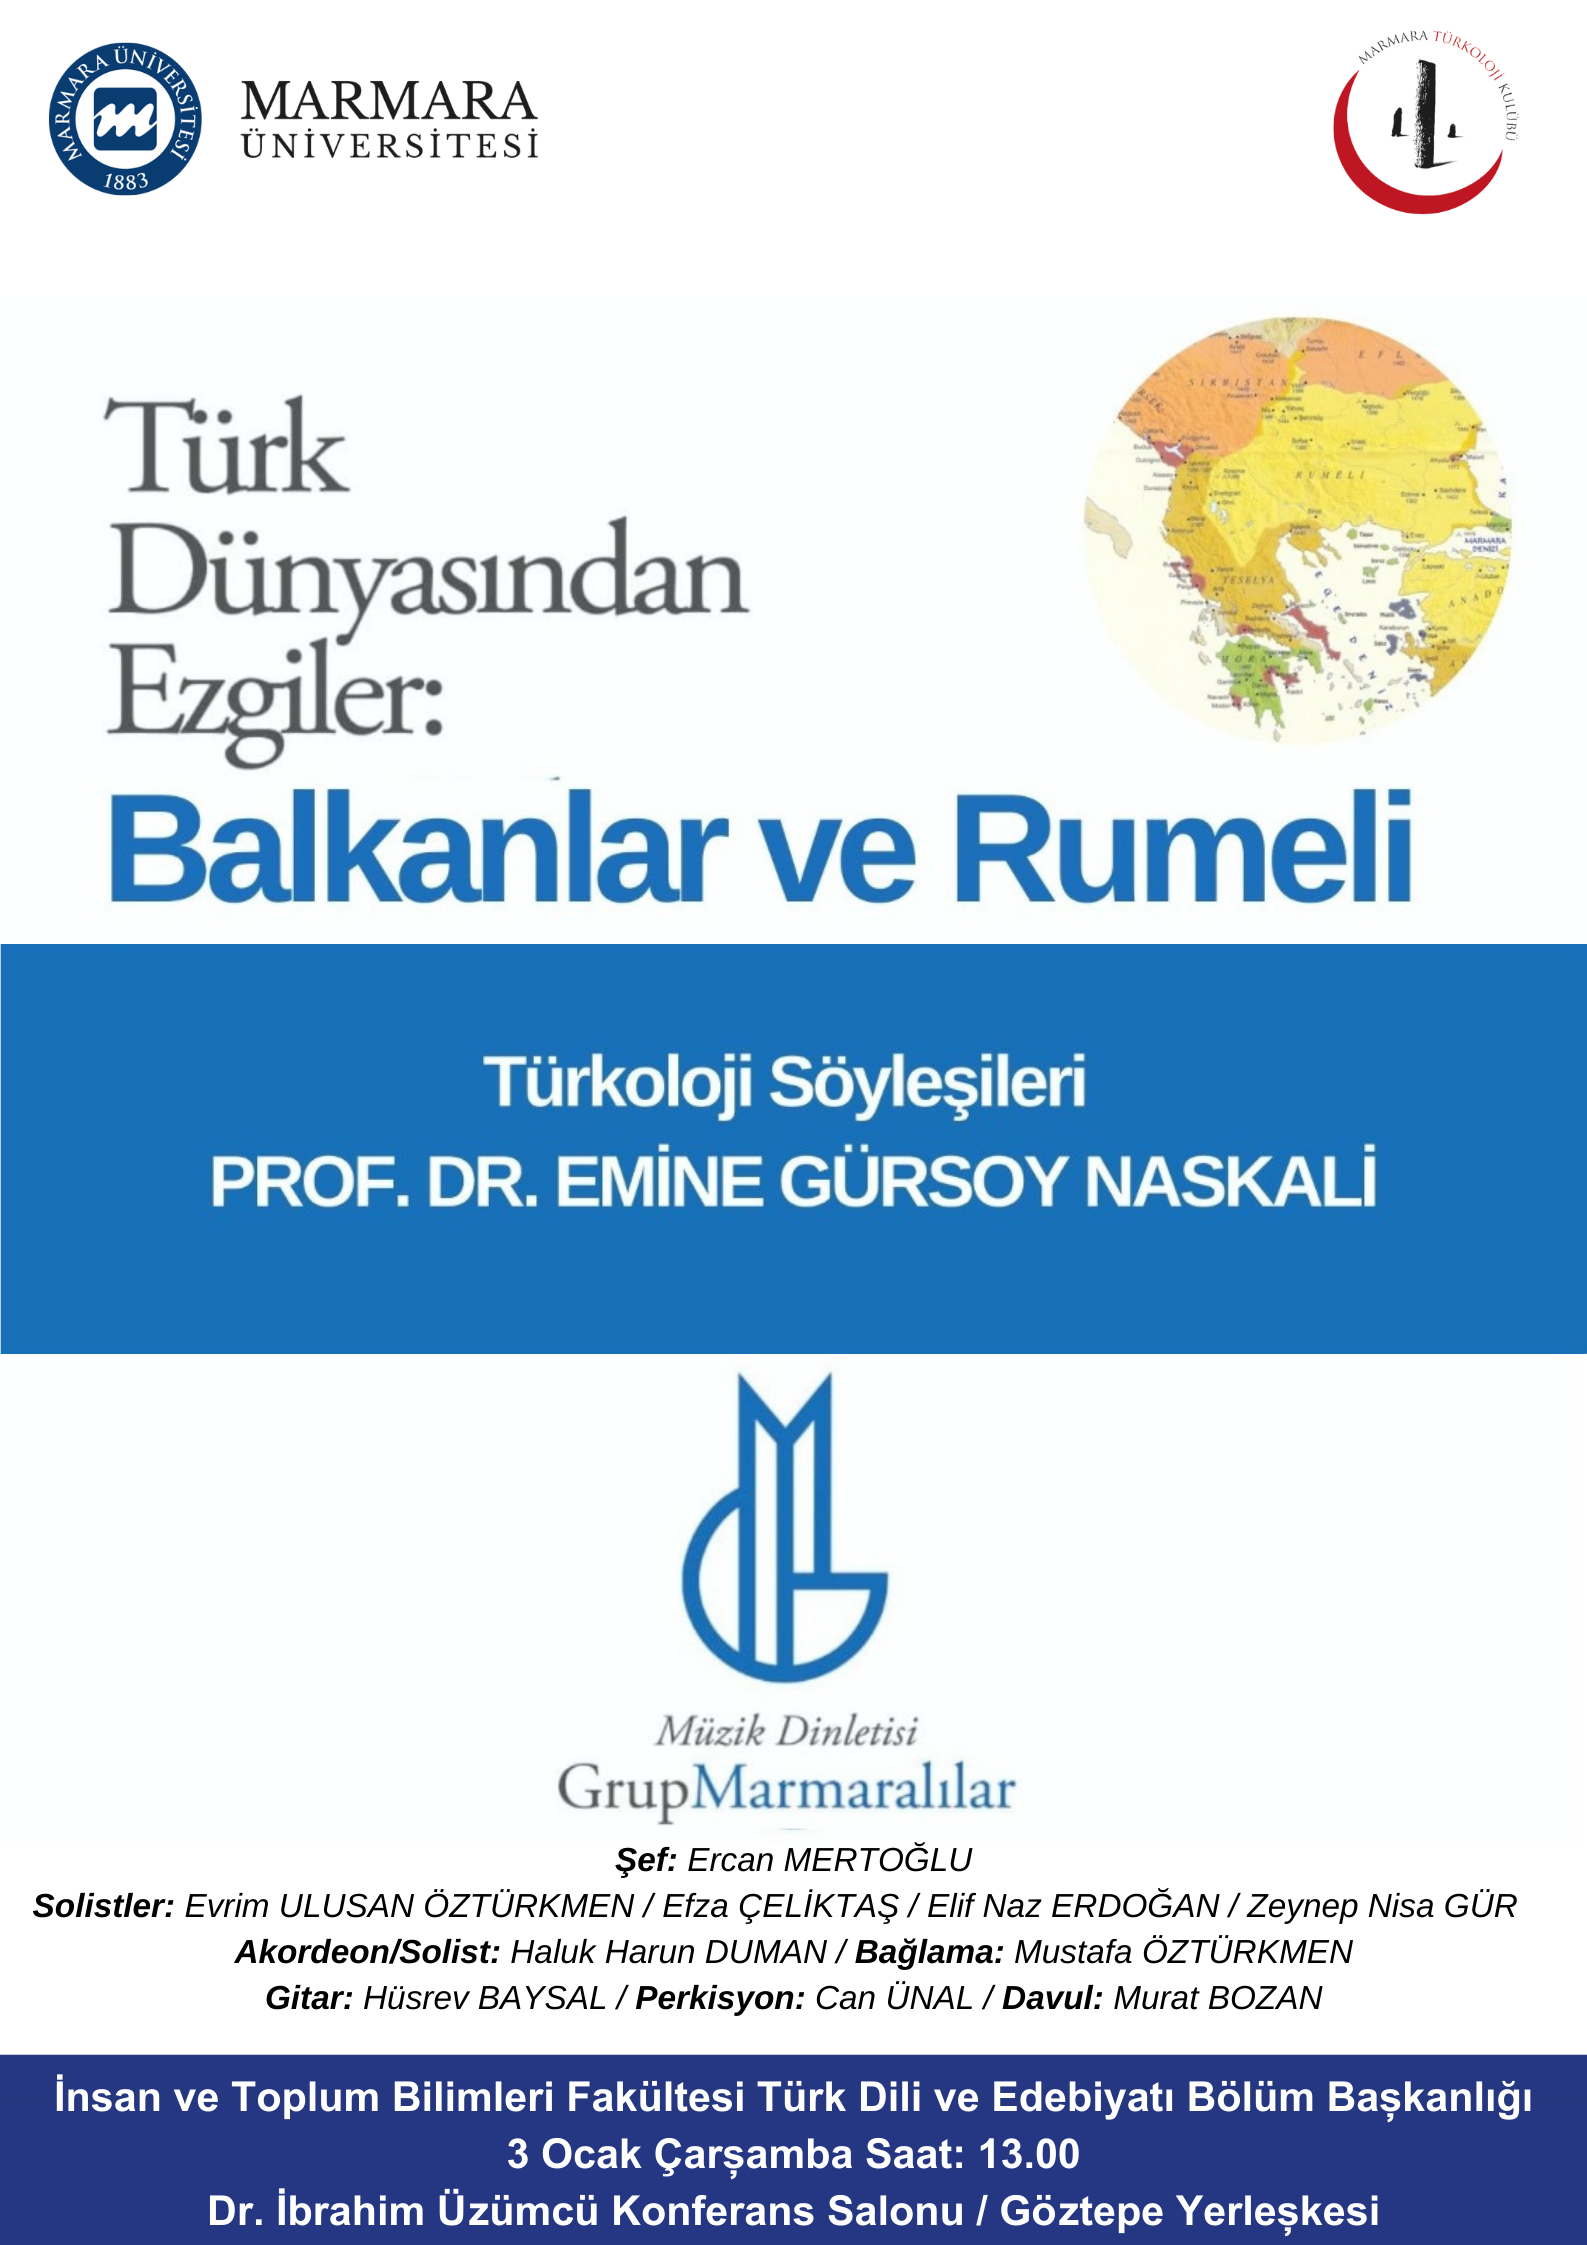 BalkanlarveRumeli.png (1.10 MB)